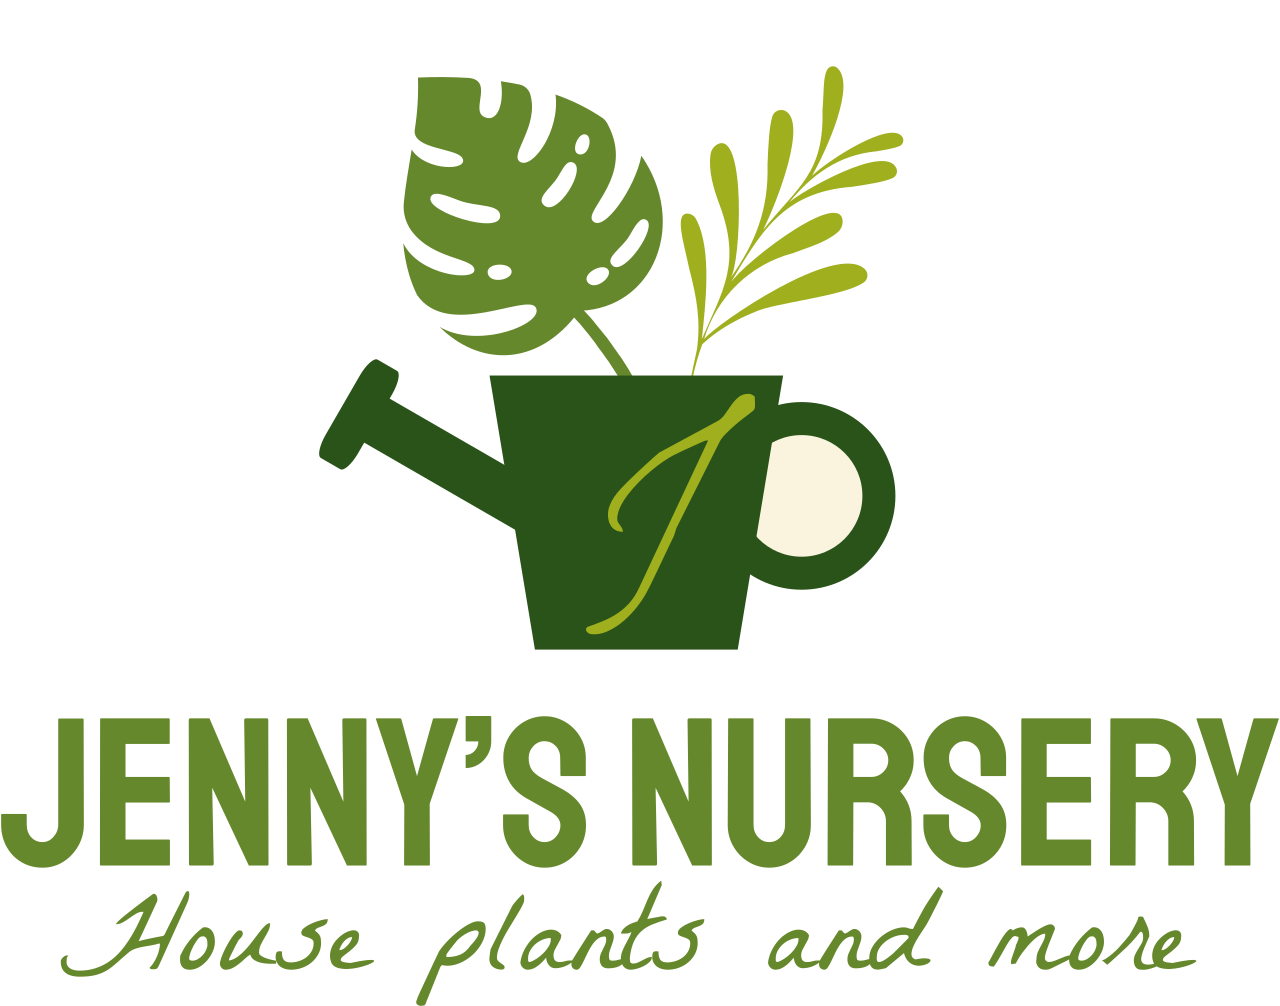 Jenny’s nursery 's logo